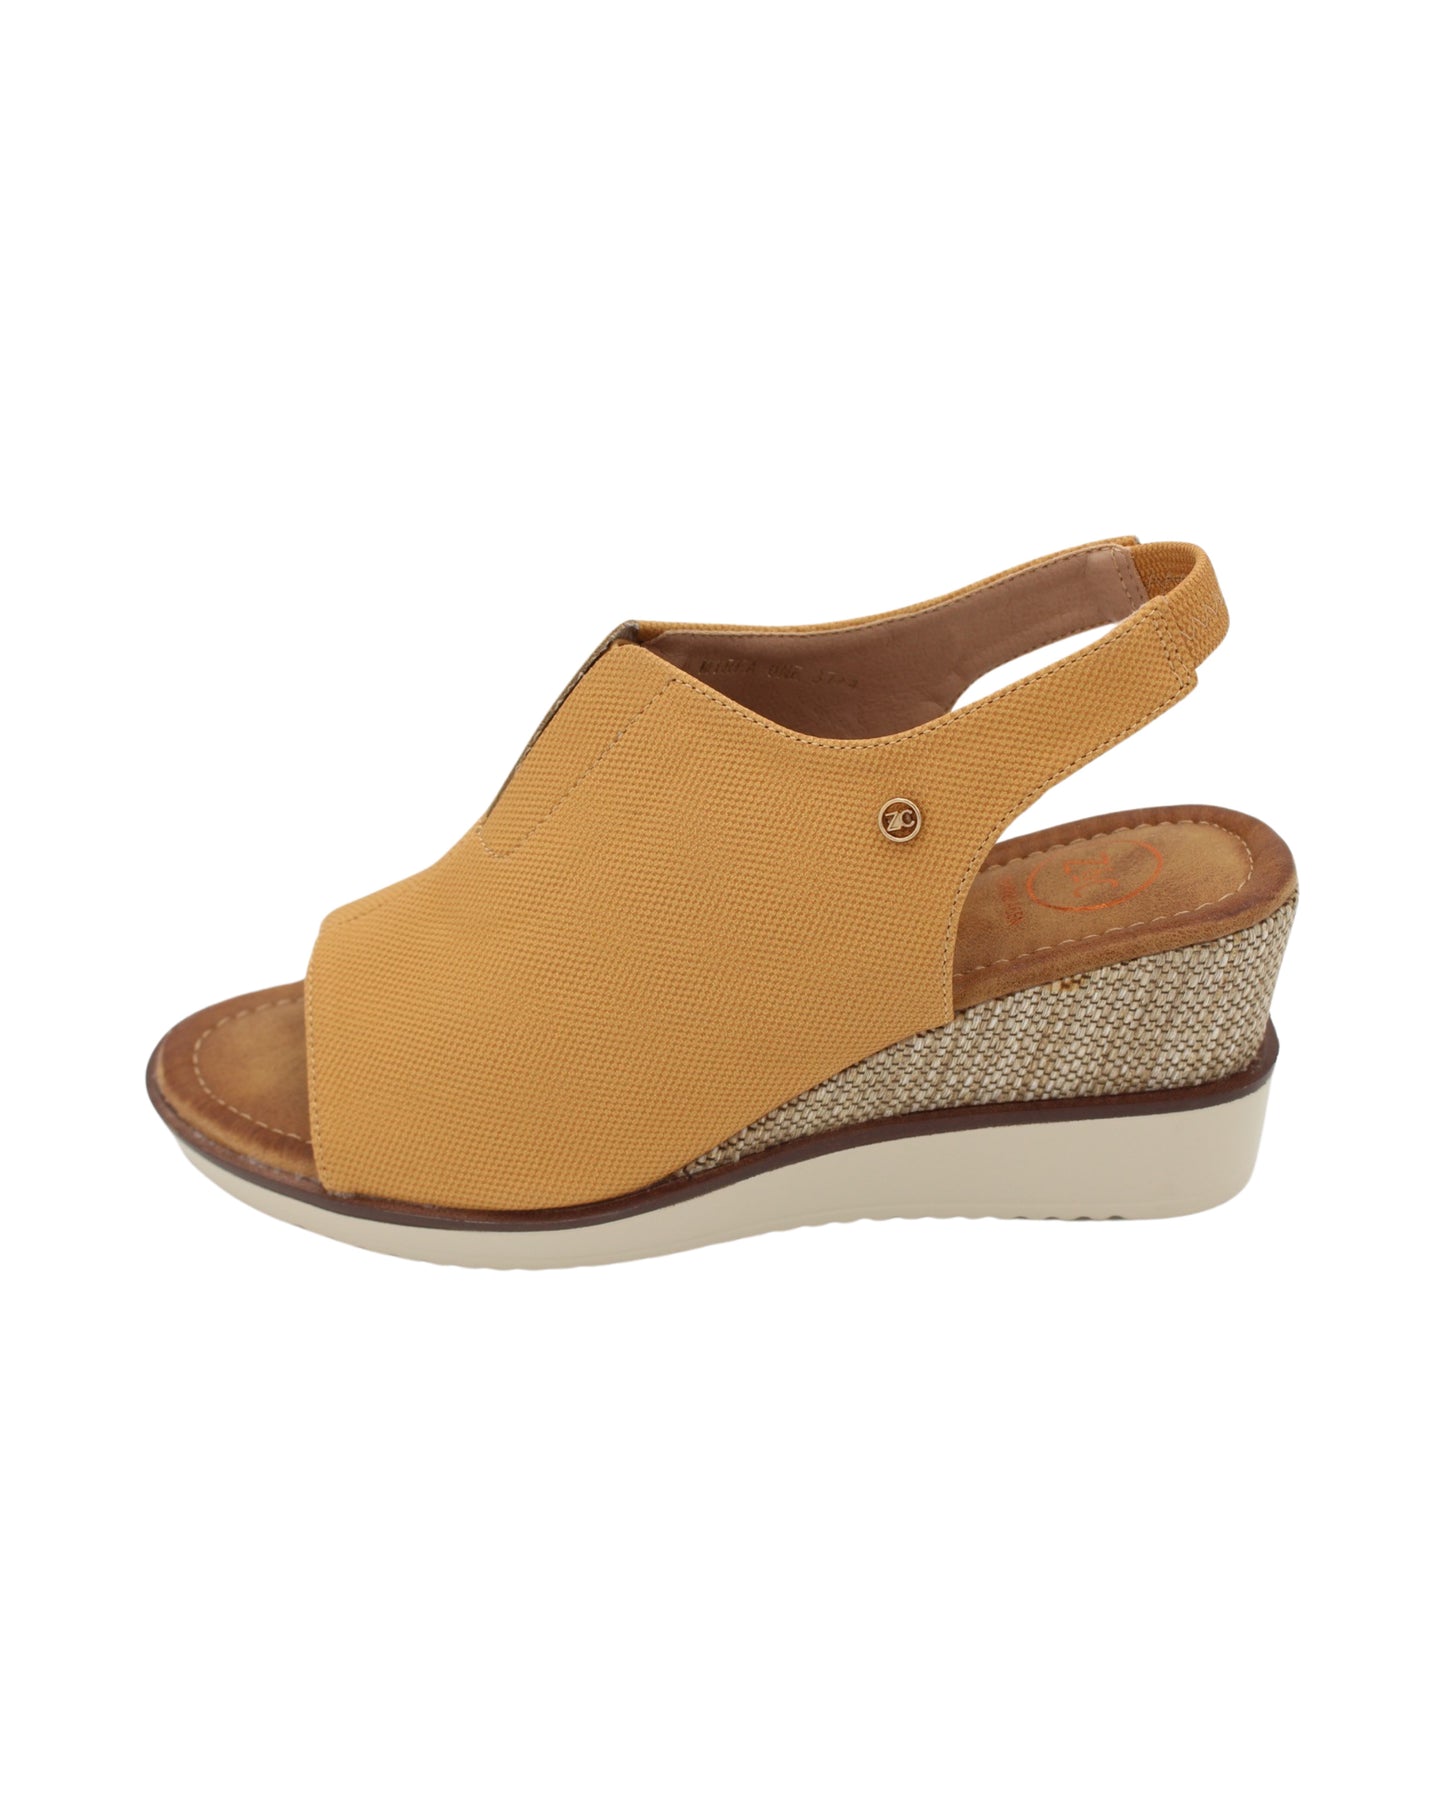 Zanni - Ladies Shoes Sandals Tan (2139)